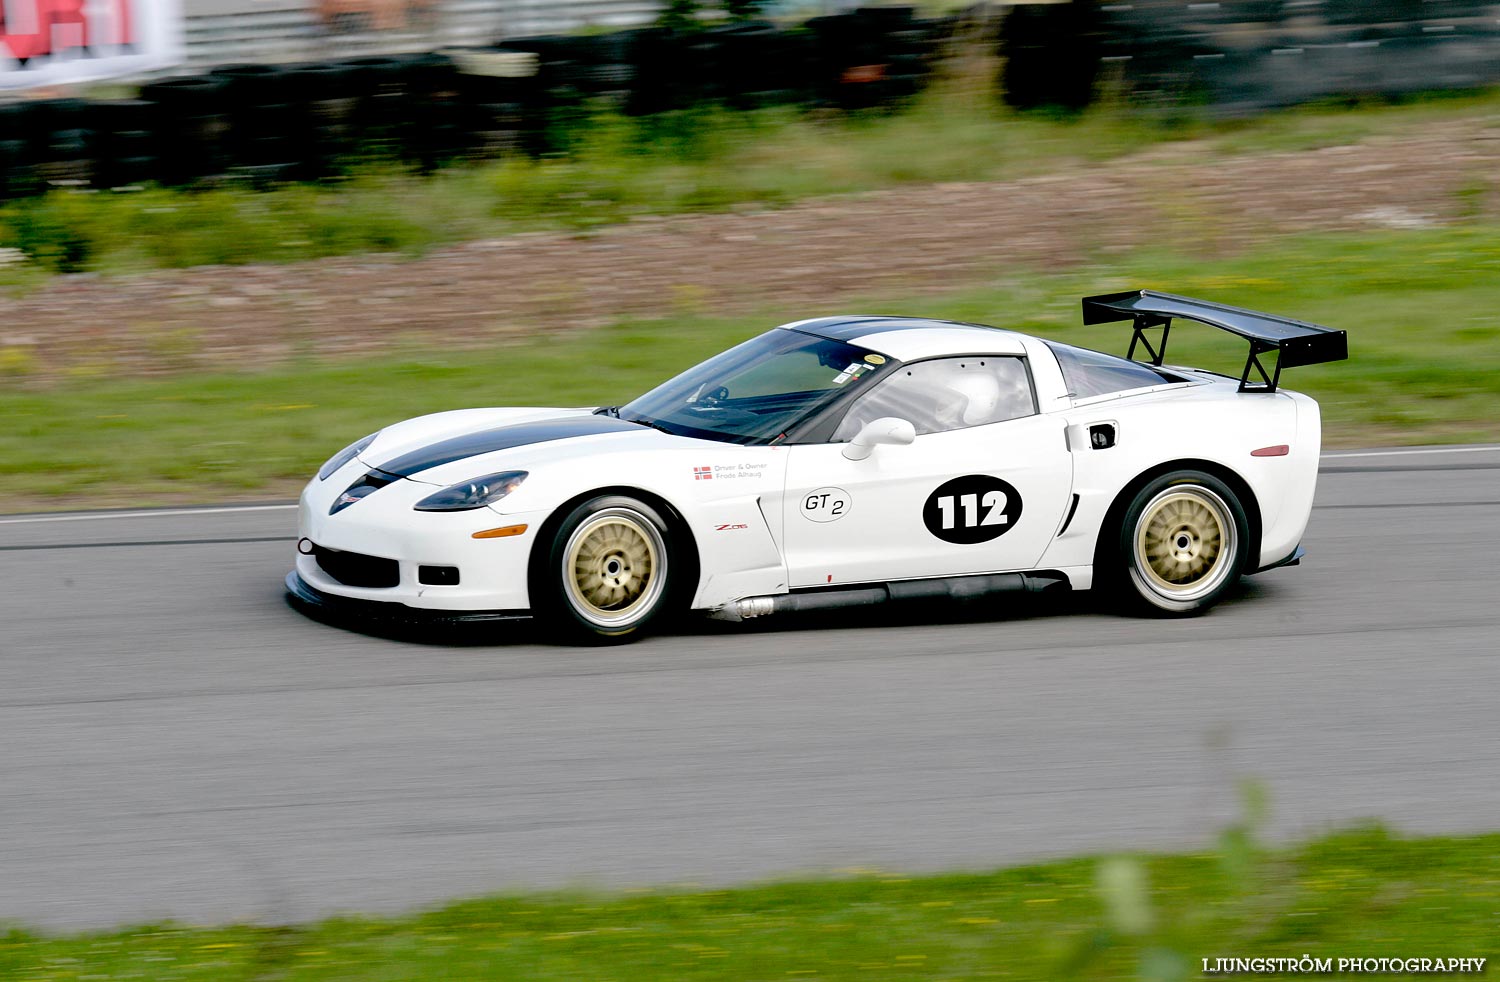 SSK Raceweek,mix,Kinnekulle Ring,Götene,Sverige,Motorsport,,2009,107512